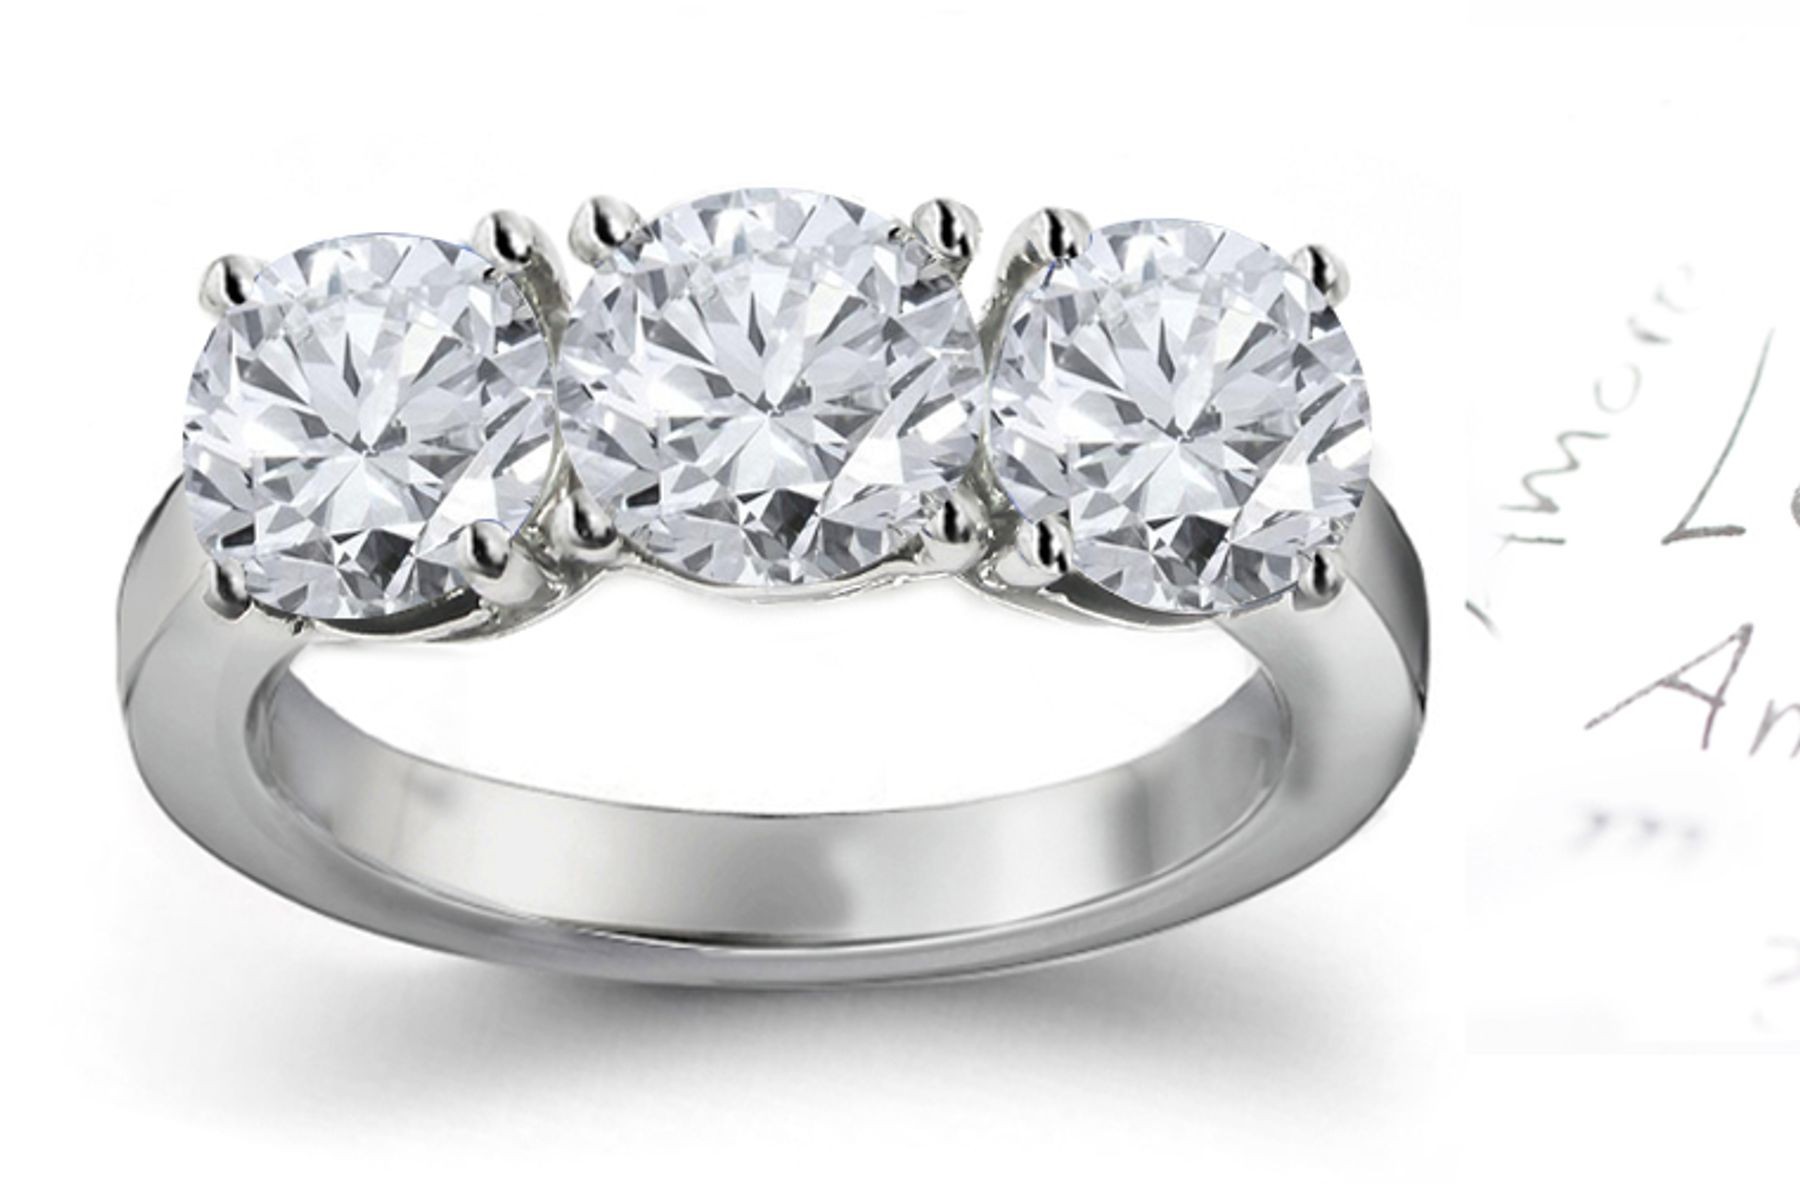 Three Stone Diamond Rings: Three Stone Diamond (Rings with Round Diamonds) Ring in Platinum & 14K White Yellow Gold. 